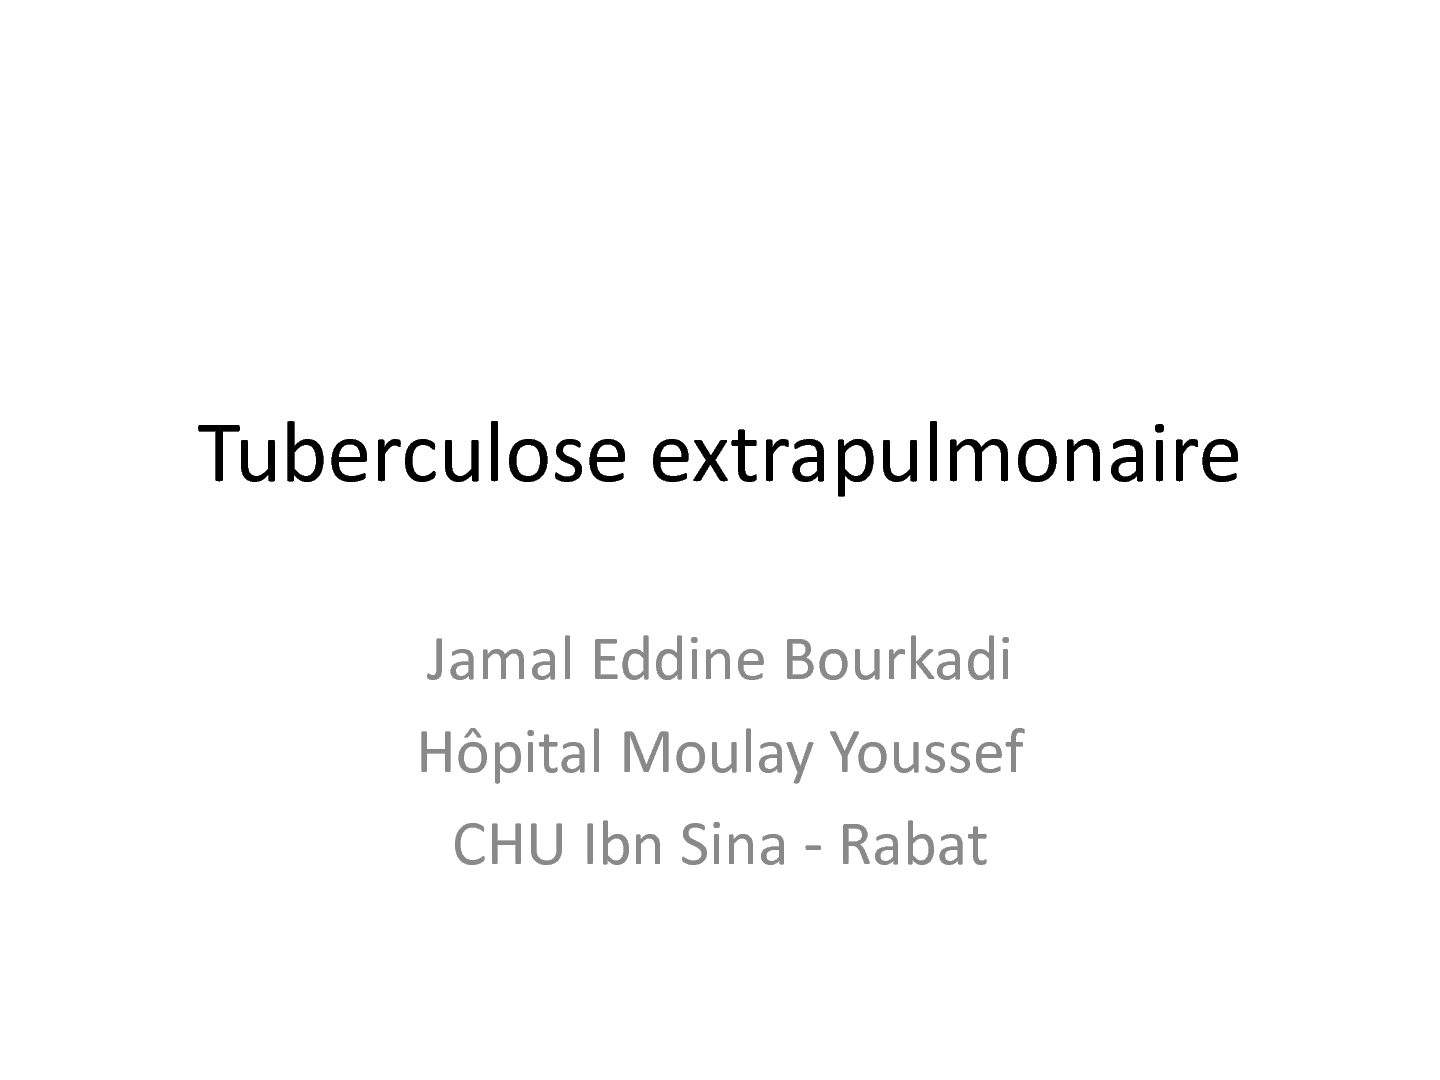 Tuberculose extrapulmonaire. J. BOURKADI